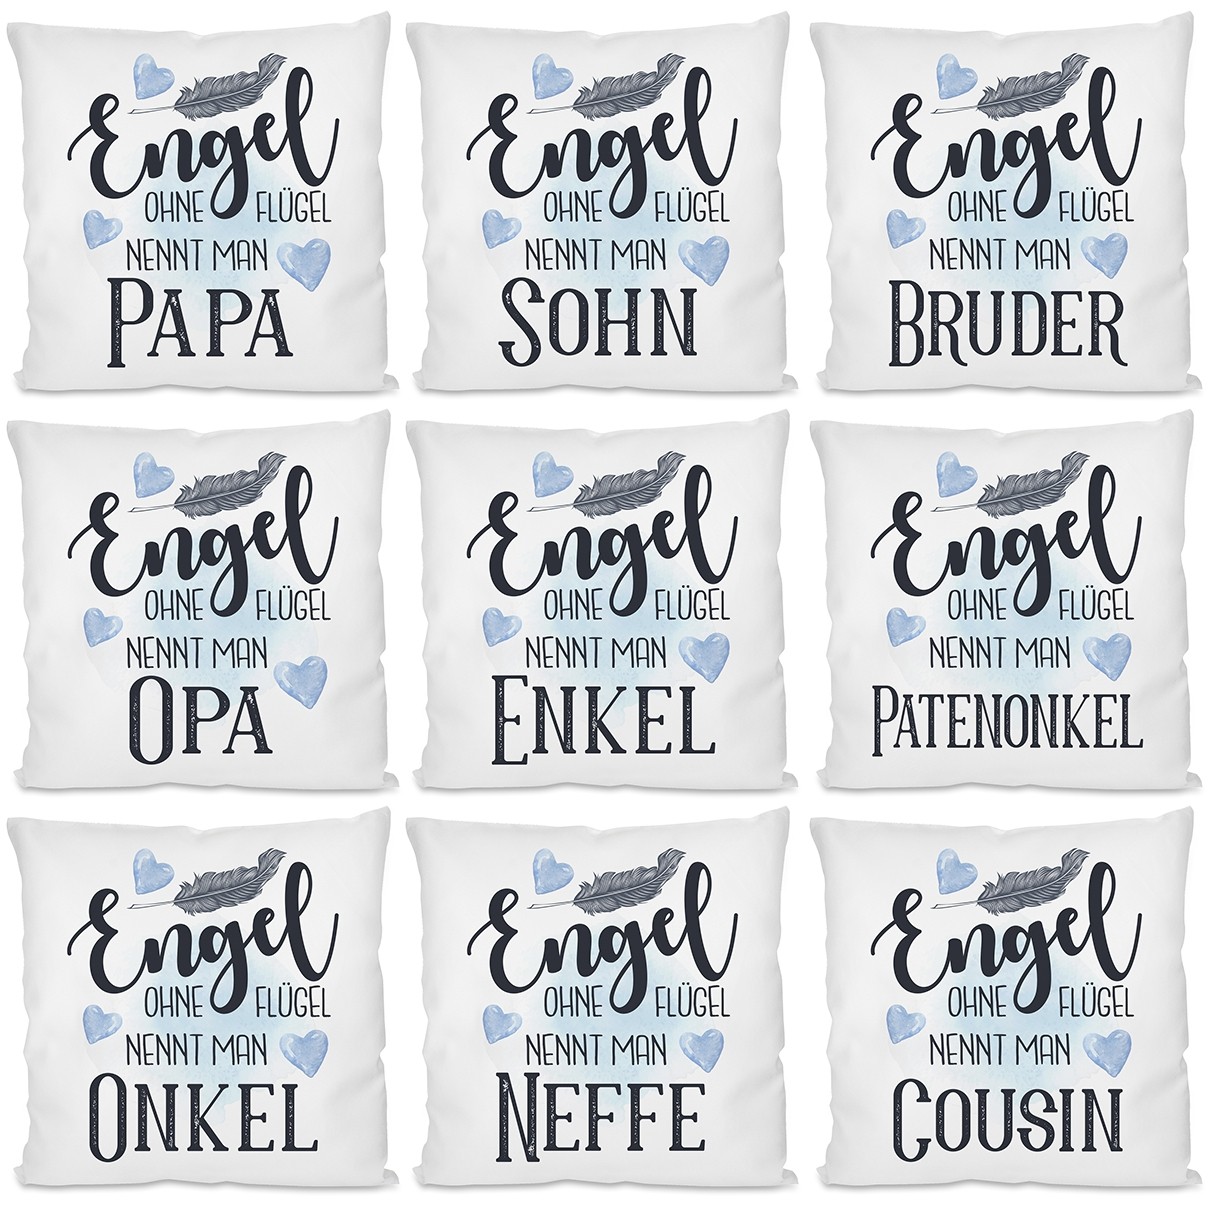 Kissen mit Motiv - Engel ohne Flügel nennt man Papa / Sohn / Opa / Enkel / Onkel / Neffe / Bruder / Cousin / Patenonkel.